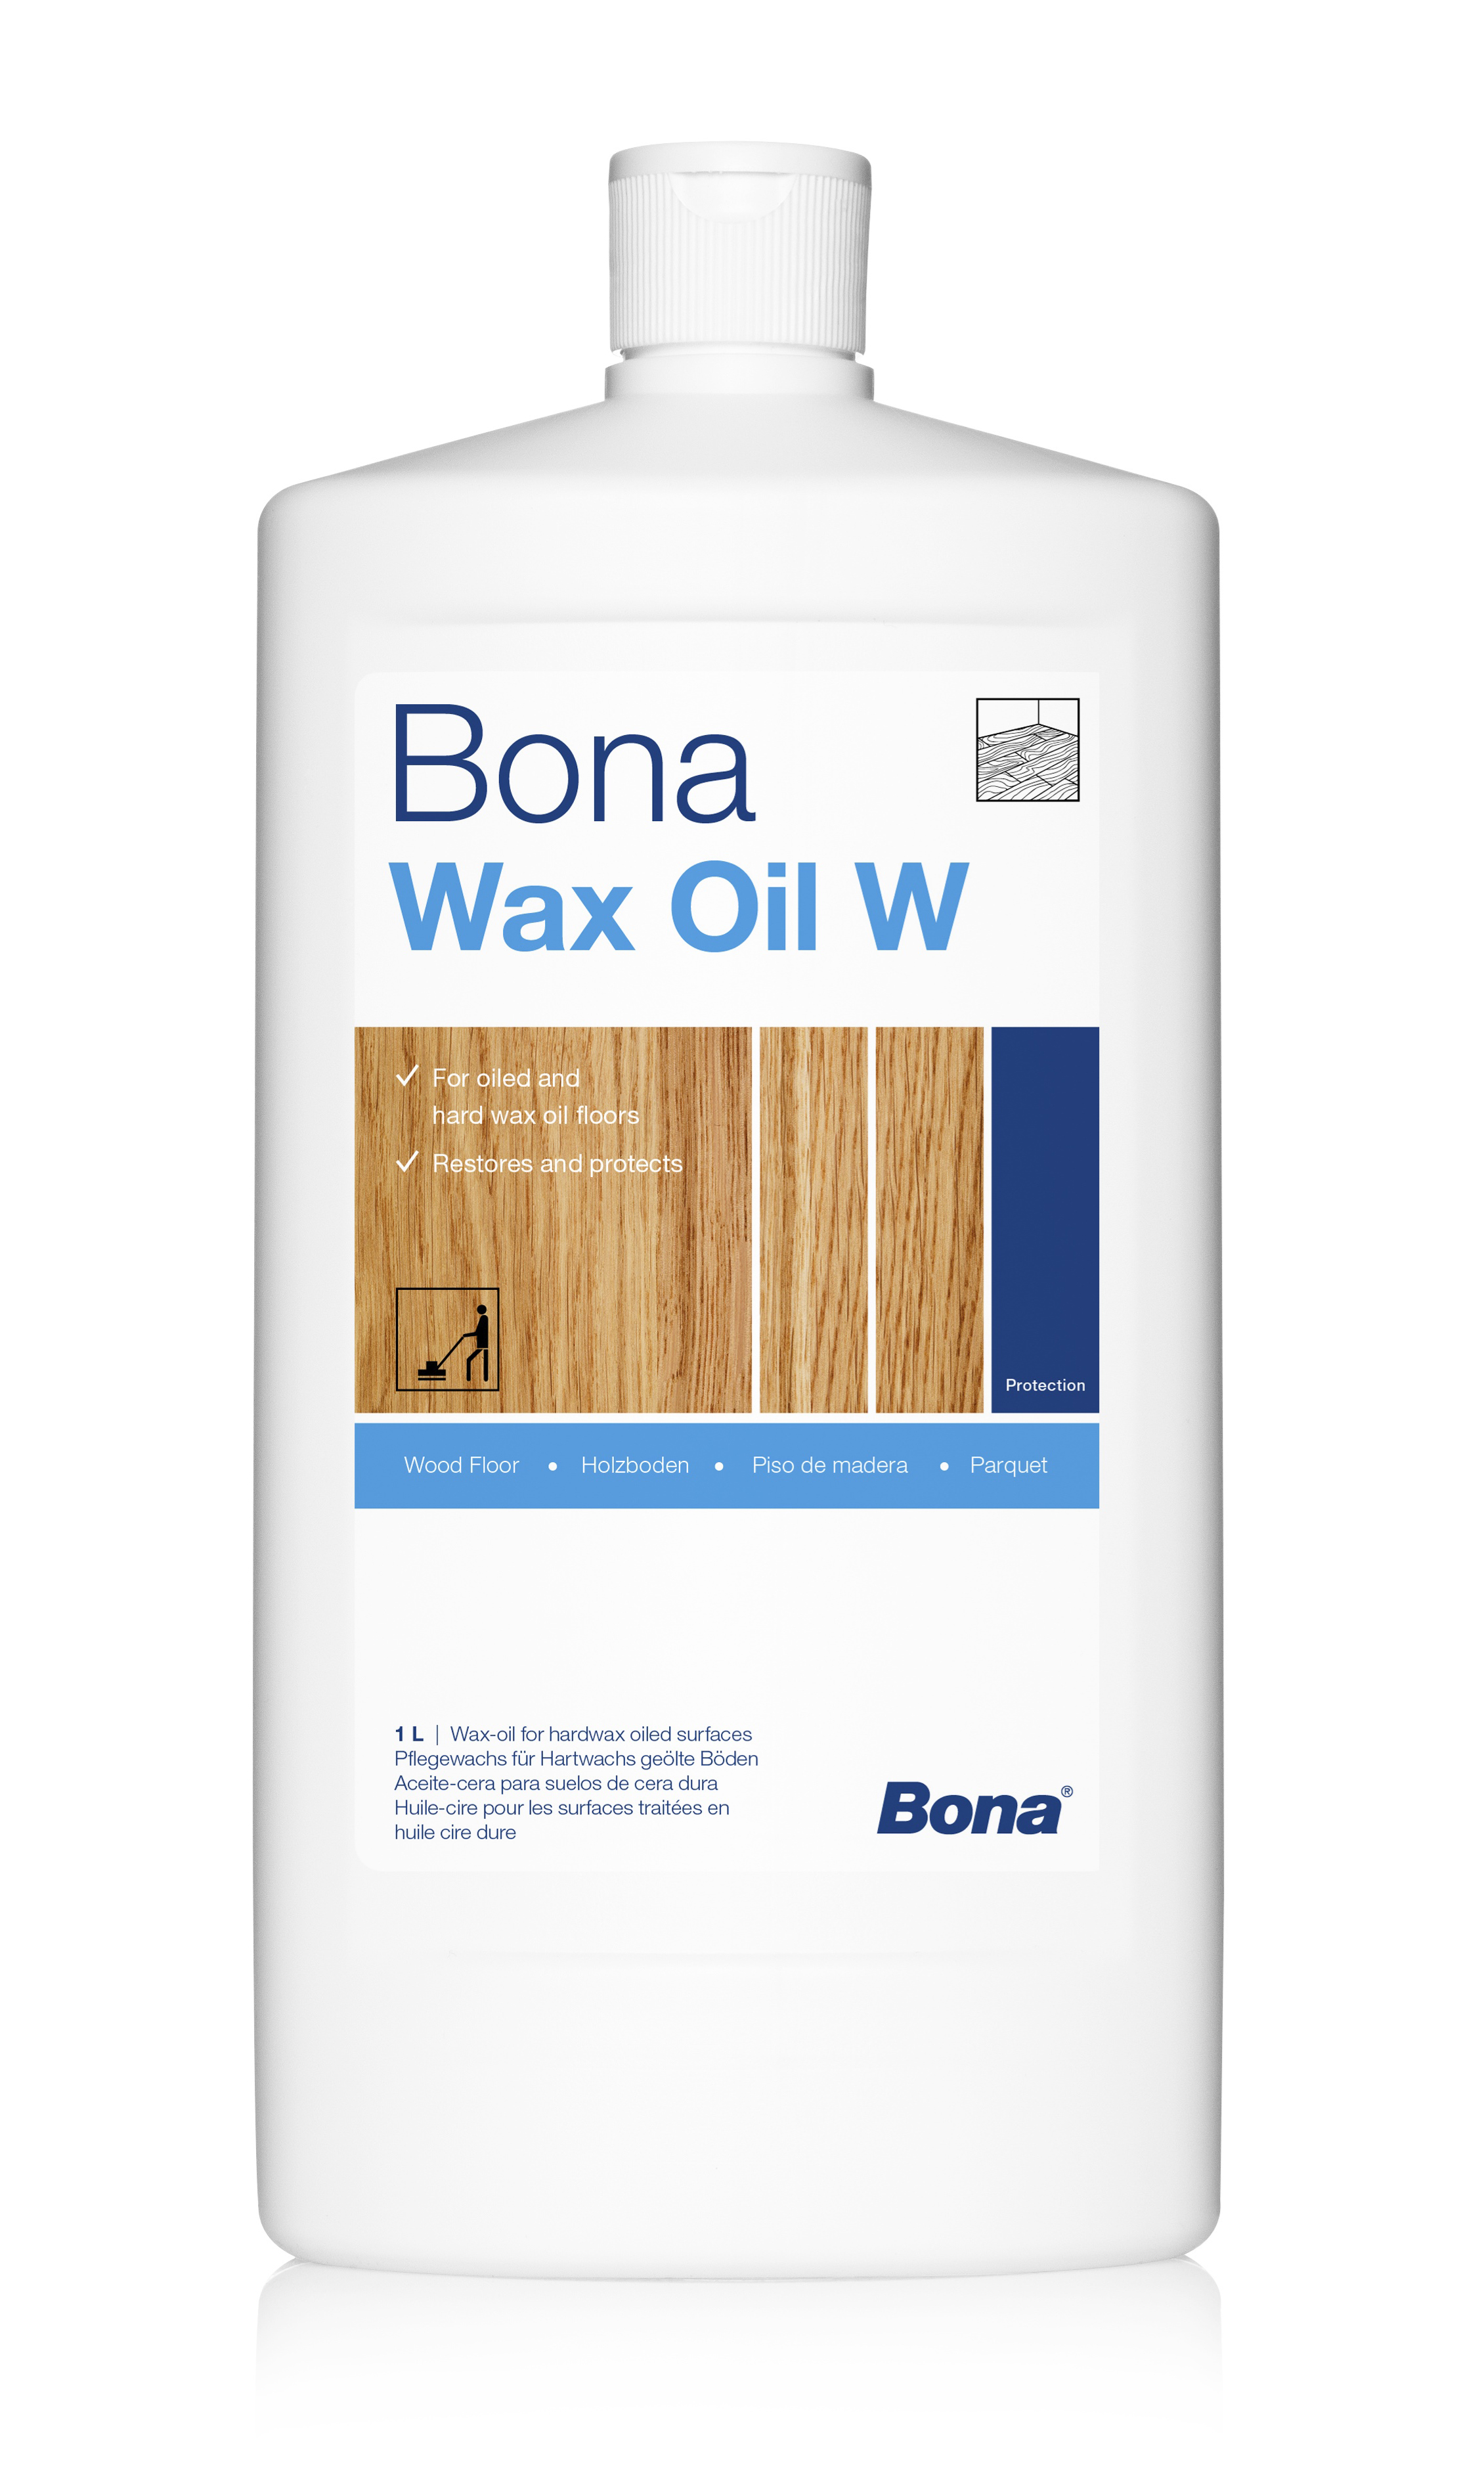 Bona Wax Oil